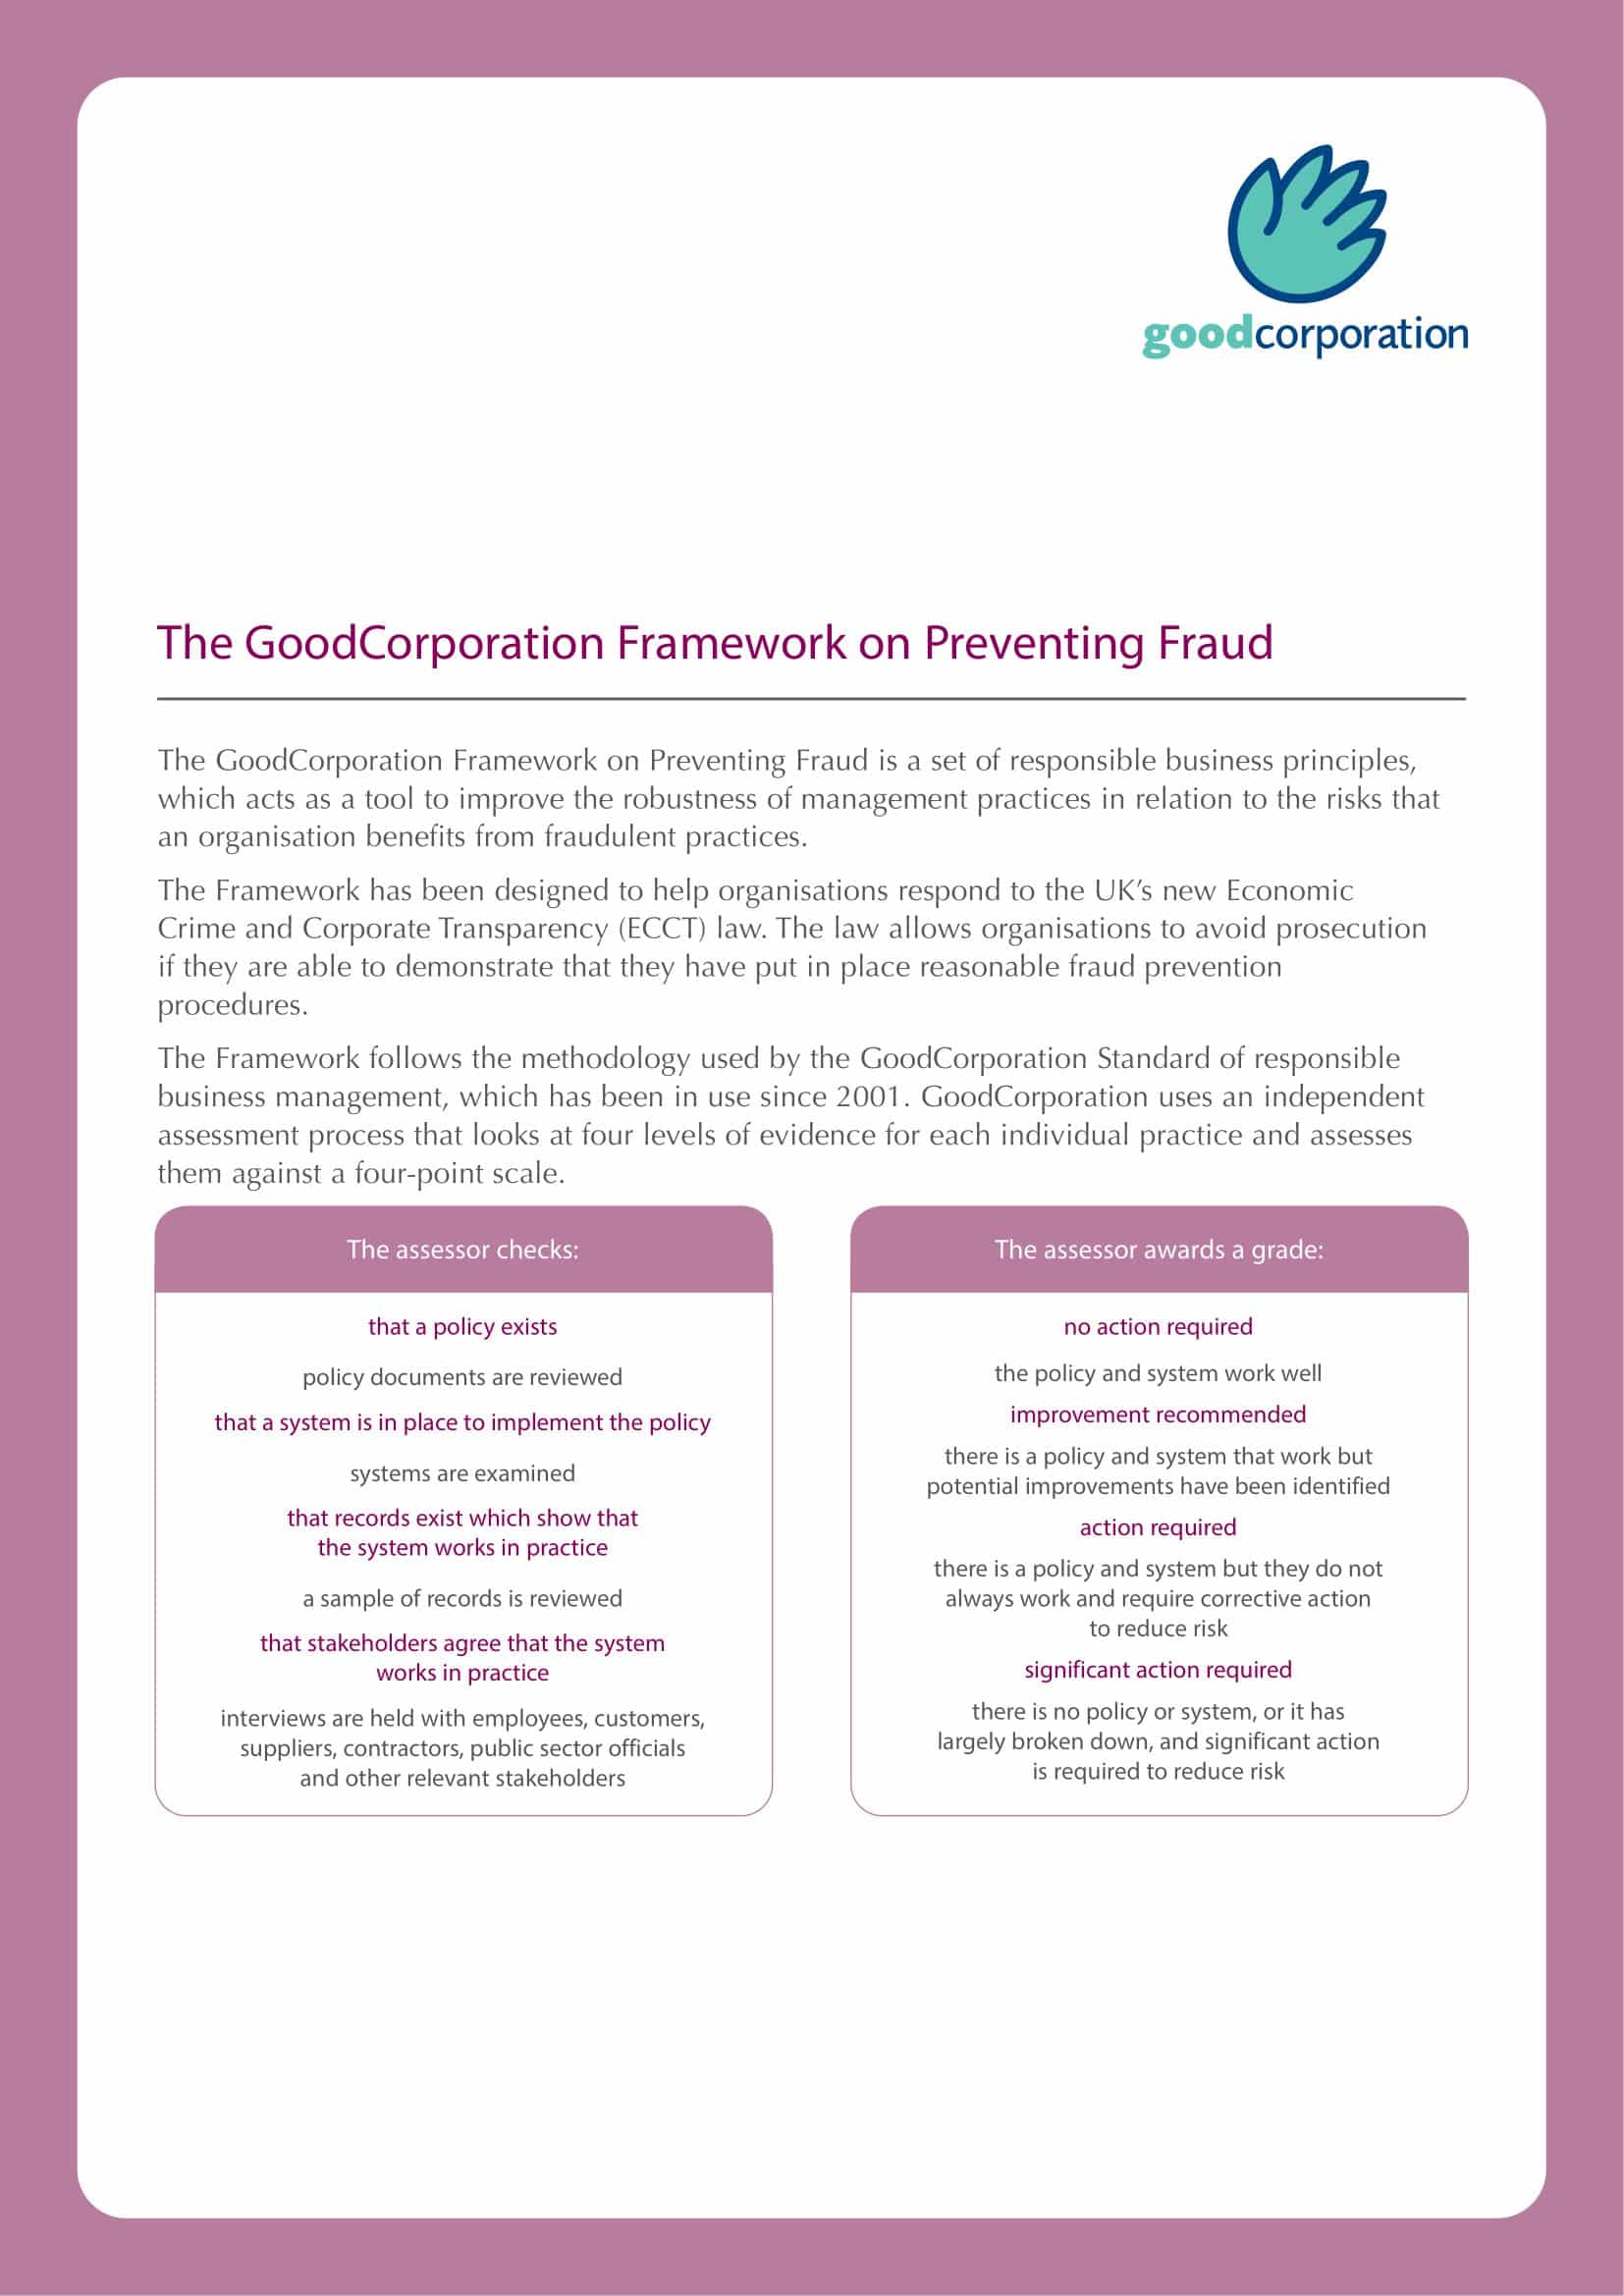 Image of the GoodCorporation Framework on Preventing Fraud